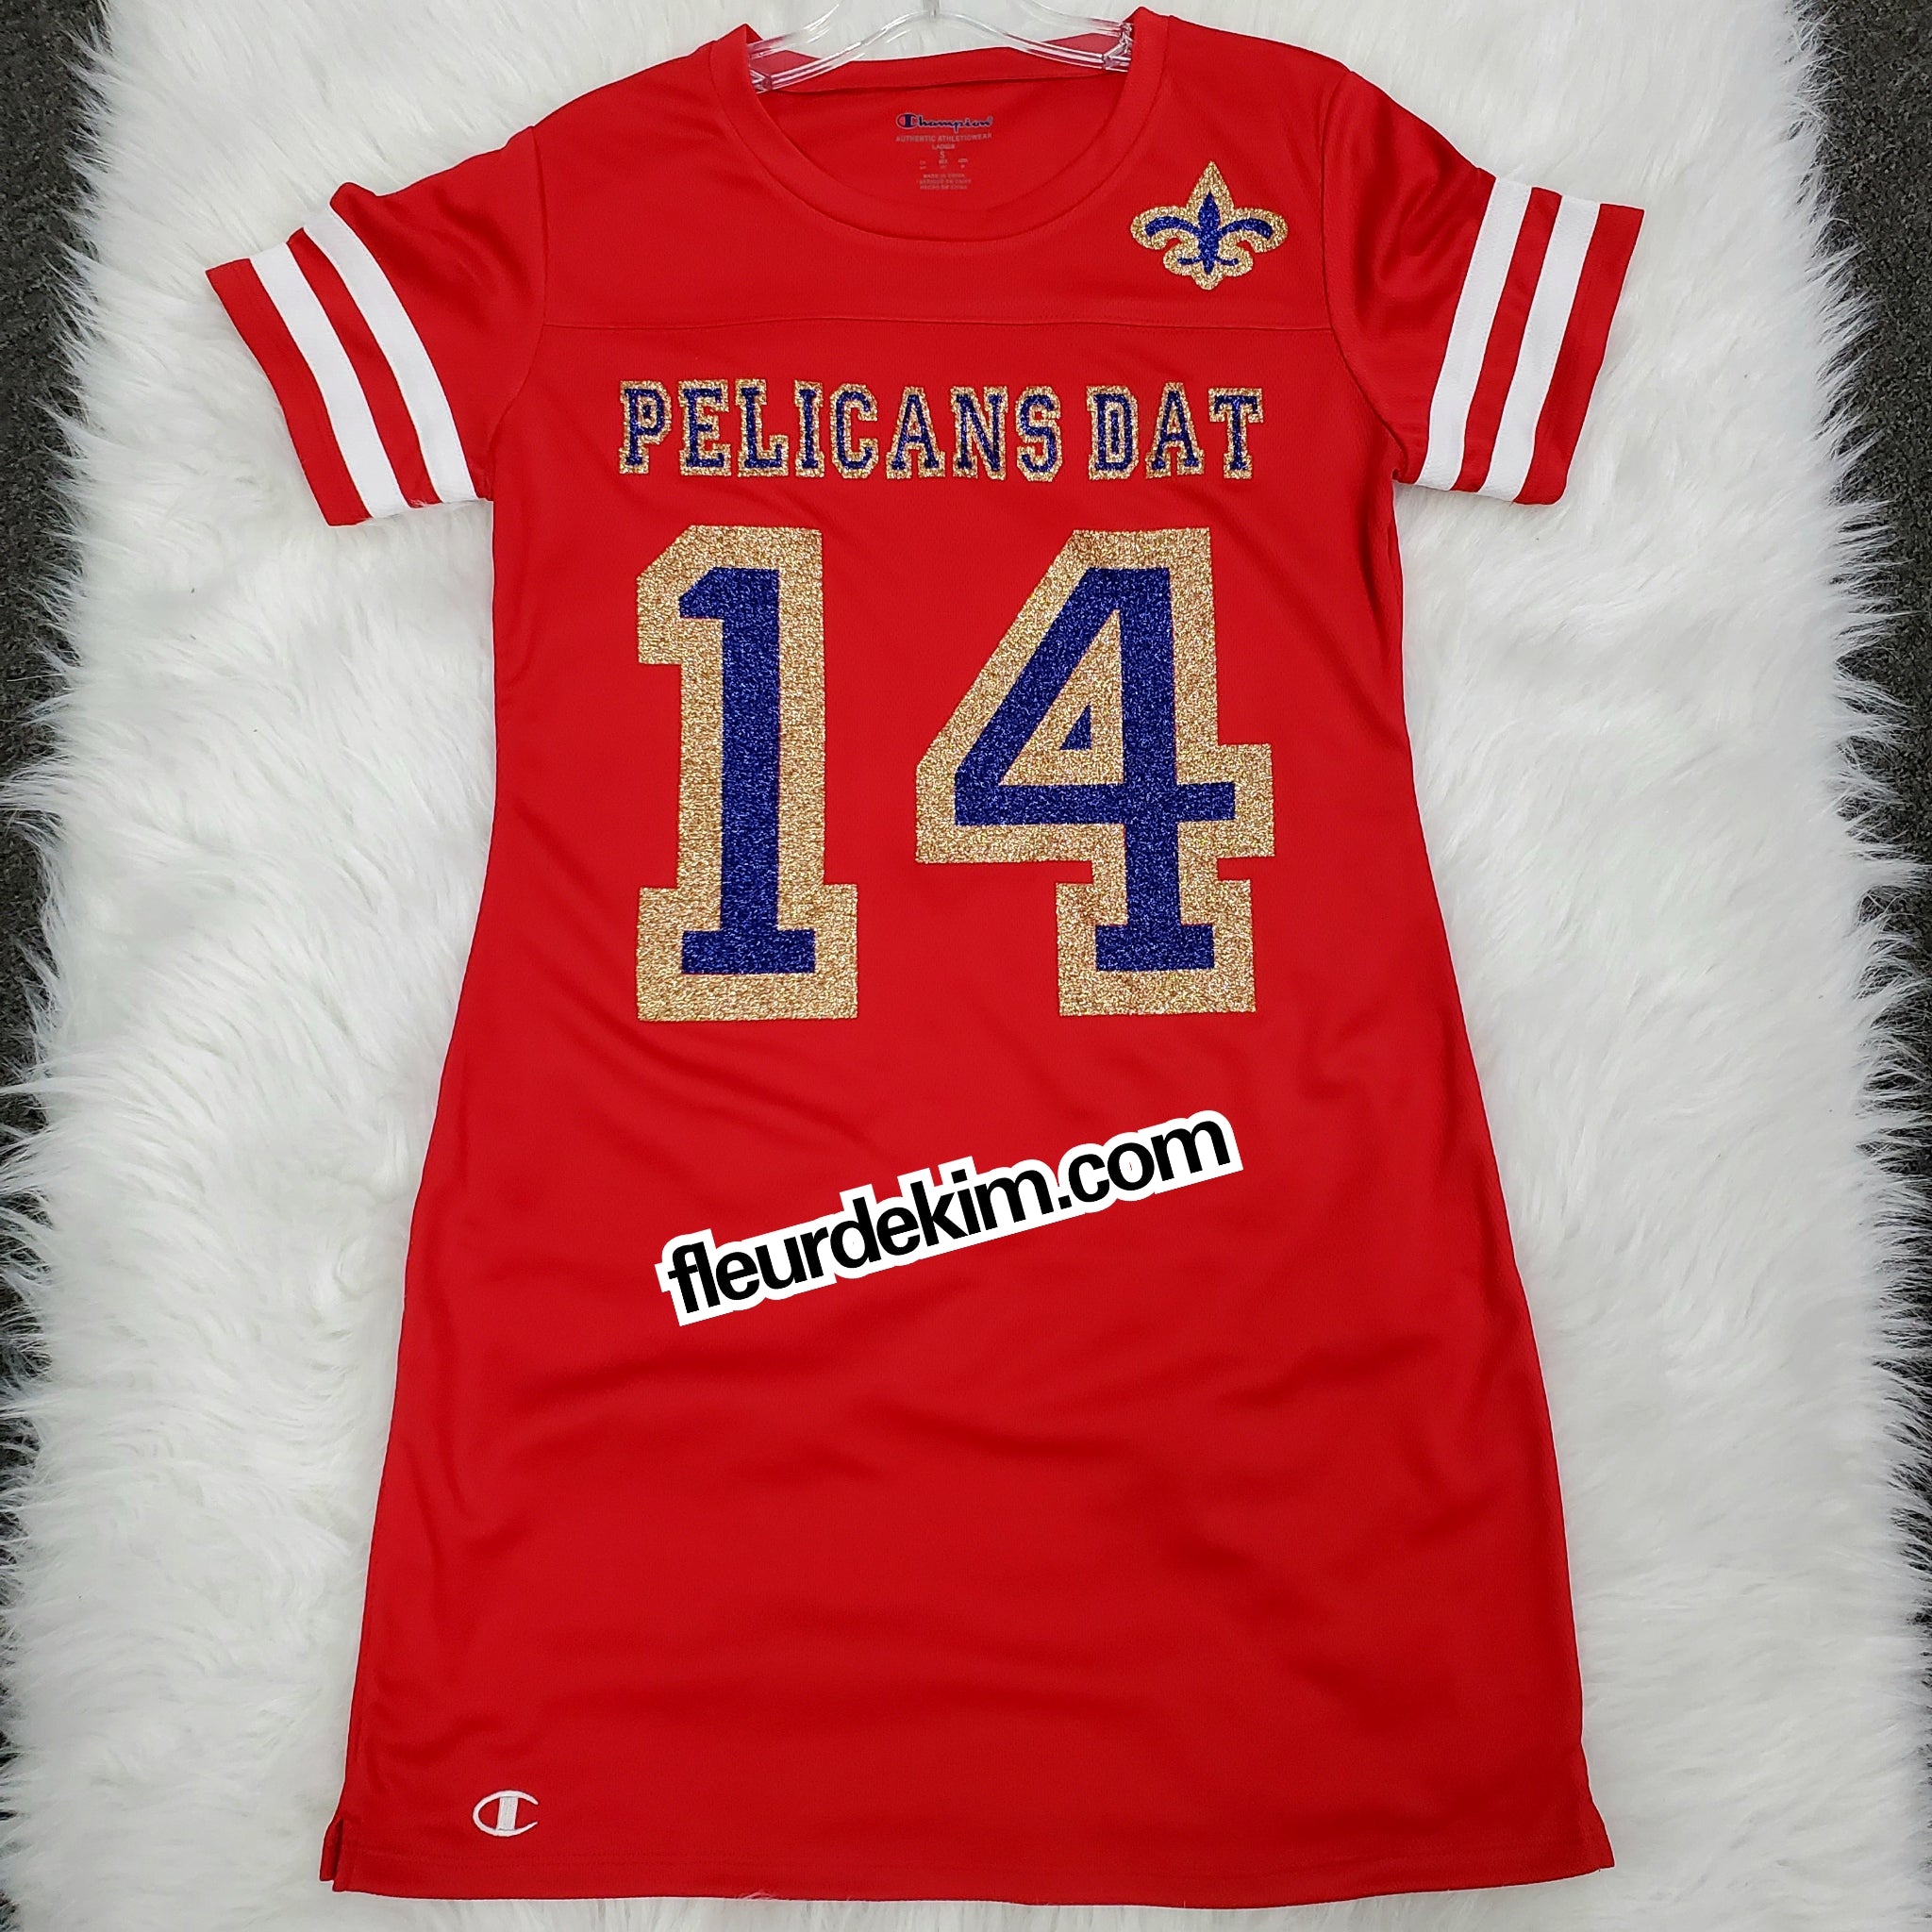 Pelicans Dat jersey dress